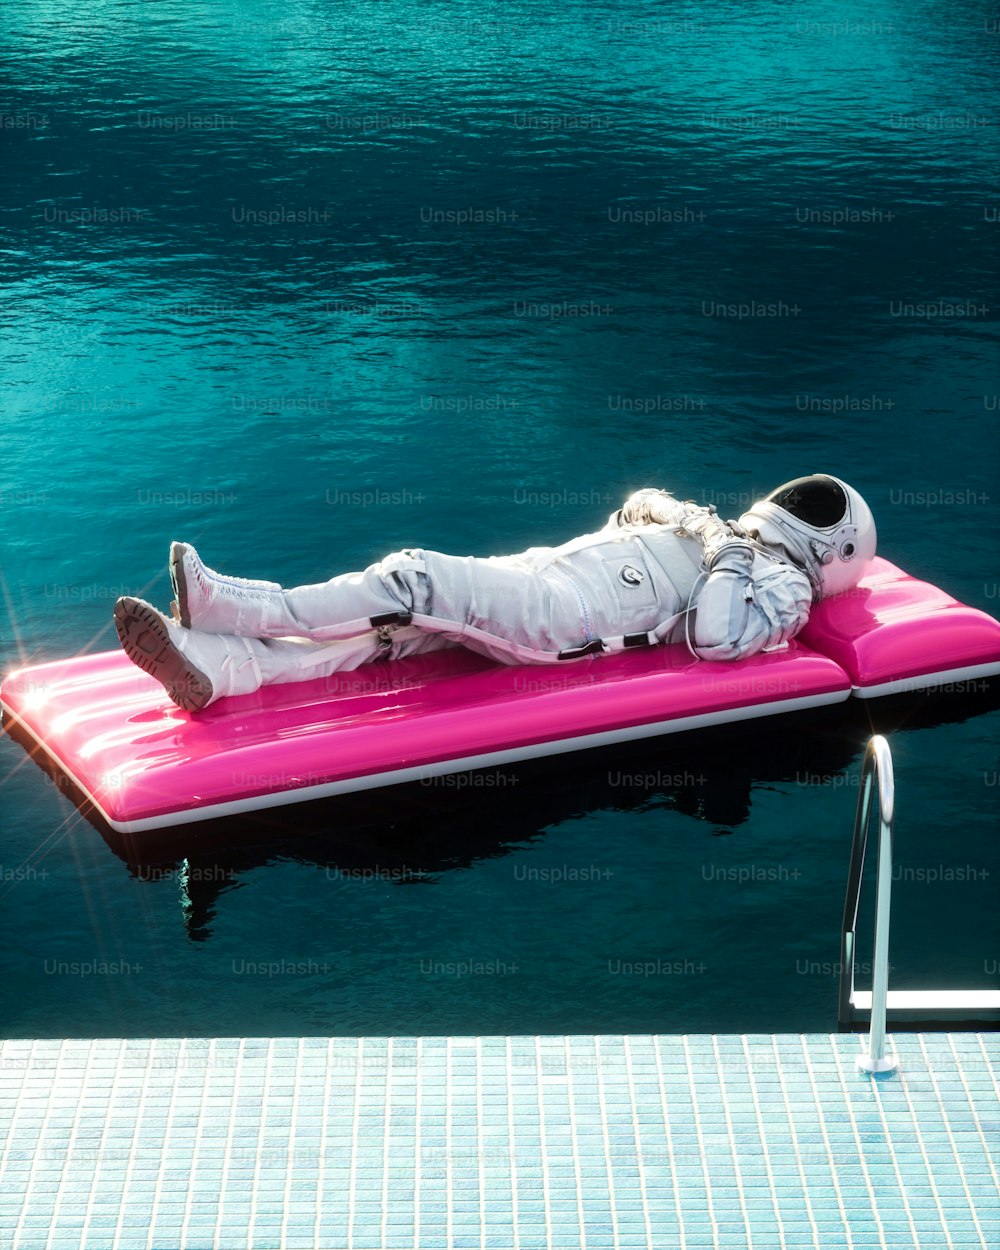 Un hombre acostado encima de un flotador rosa en el agua